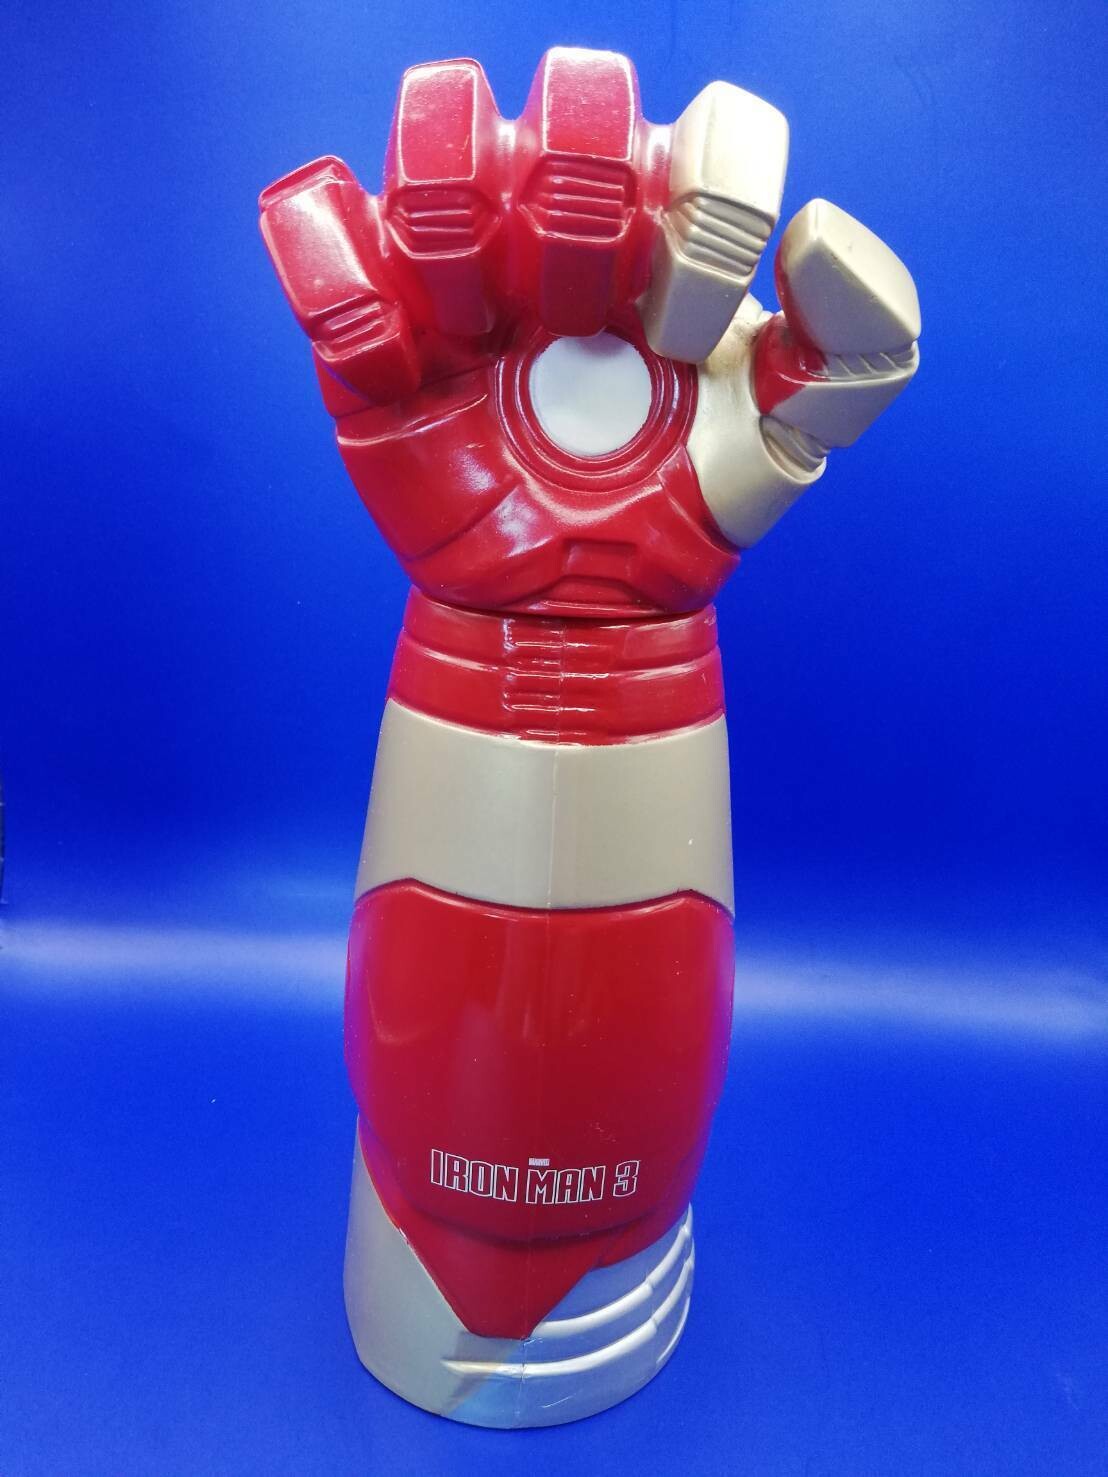 Marvel Avengers Iron Man 3 Hand Blaster "The Repulsors" Movie Cup 2013